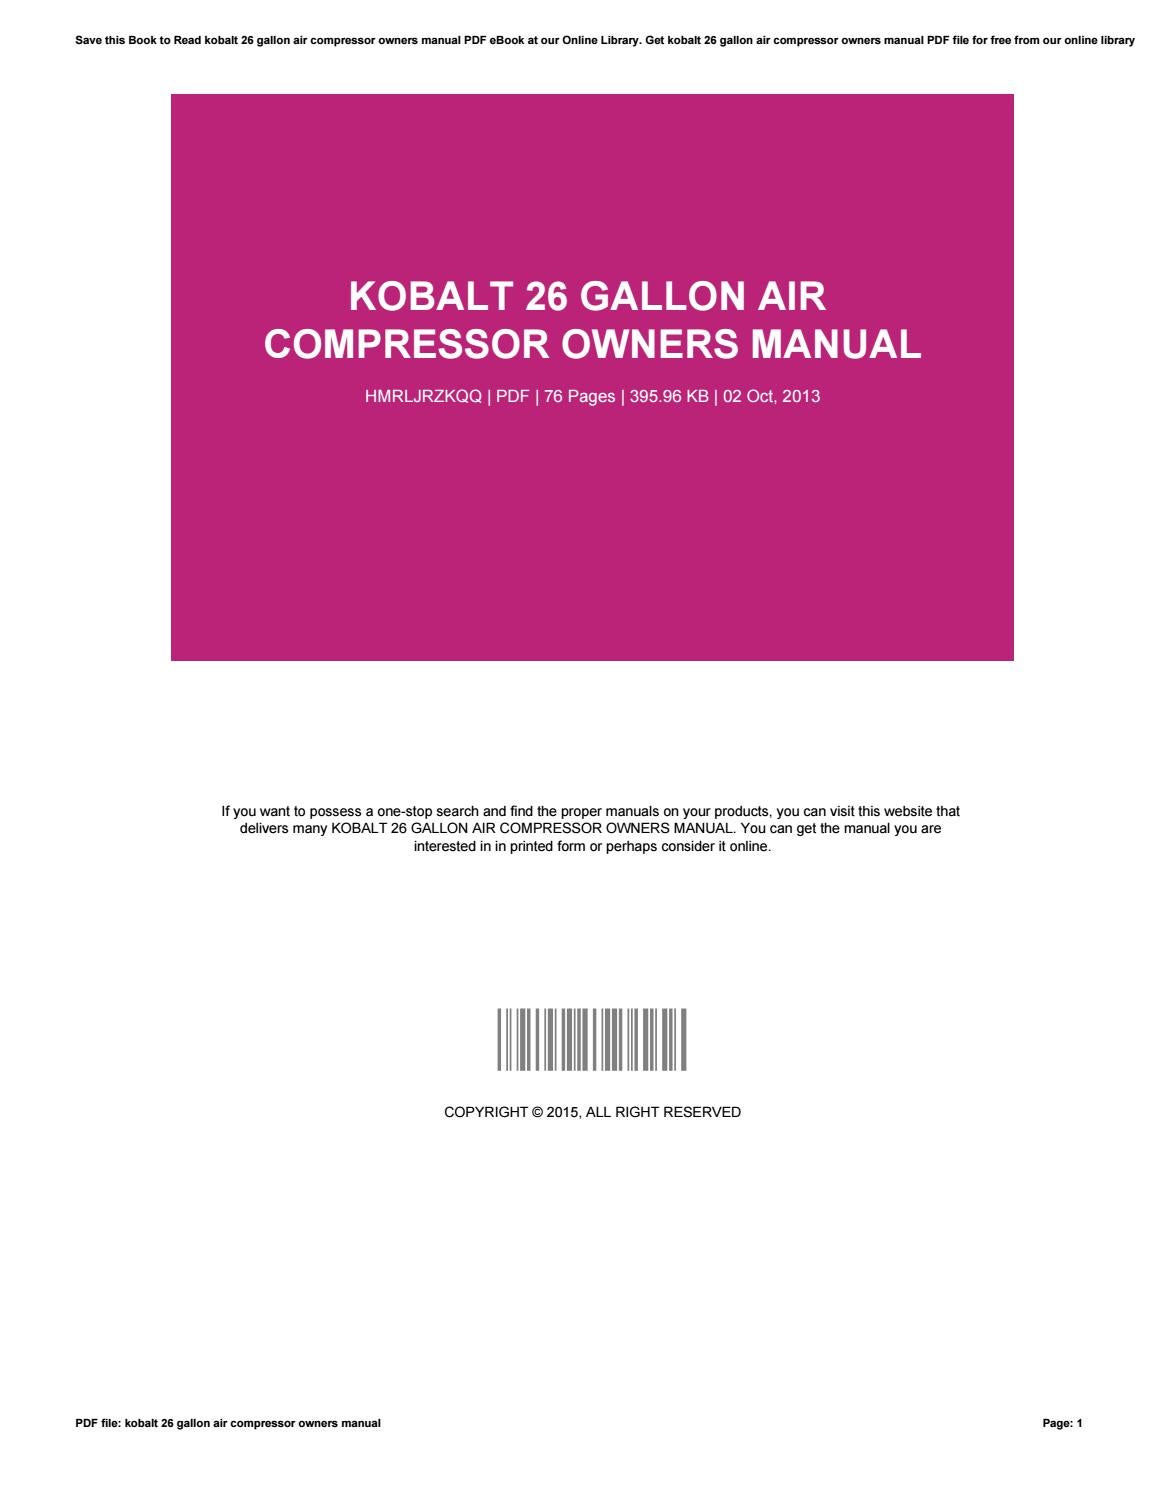 mastercraft air compressor owners manual